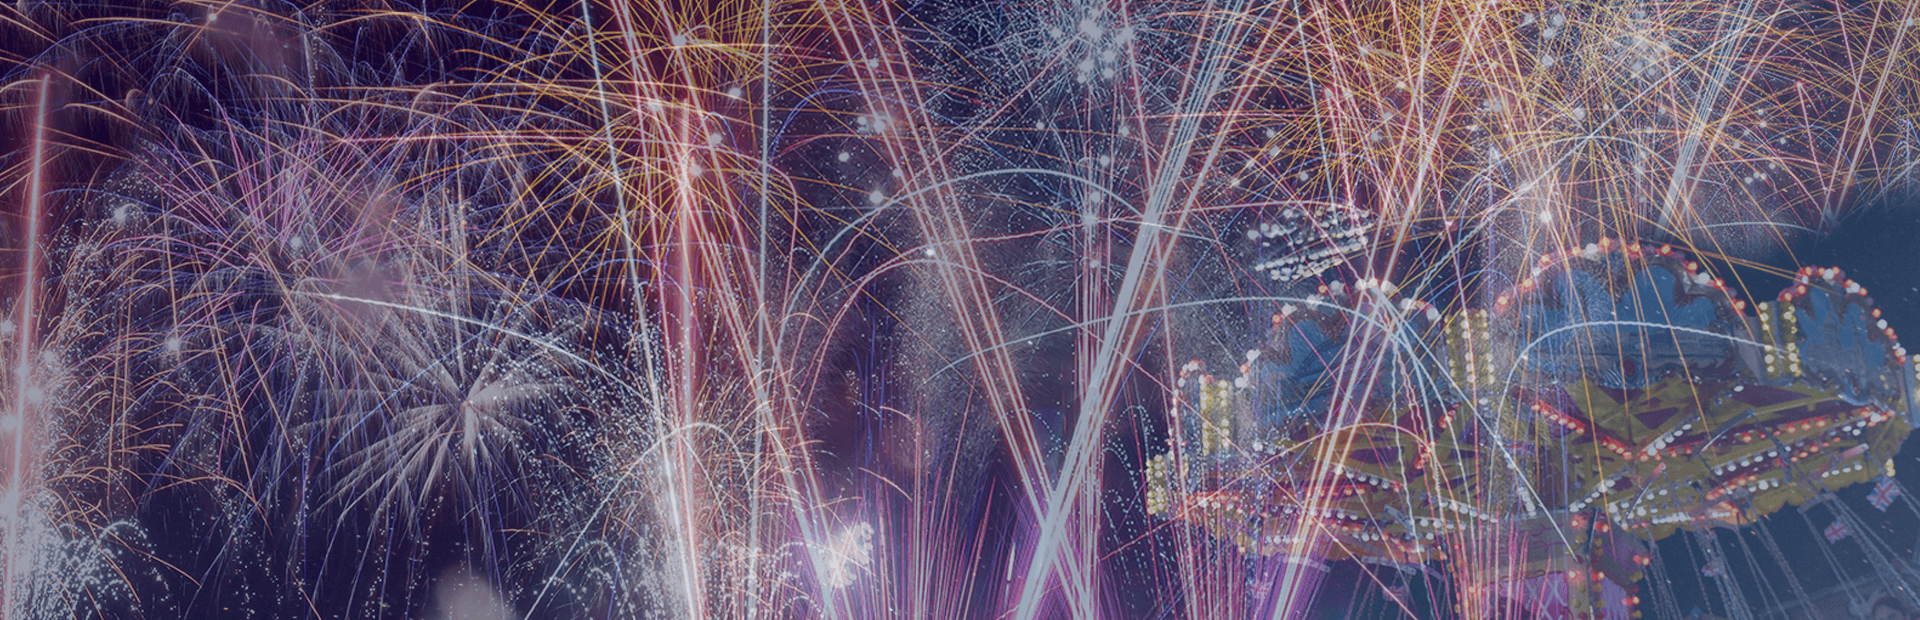 Edgbaston Fireworks Spectacular & Fun Fair is back for 2022